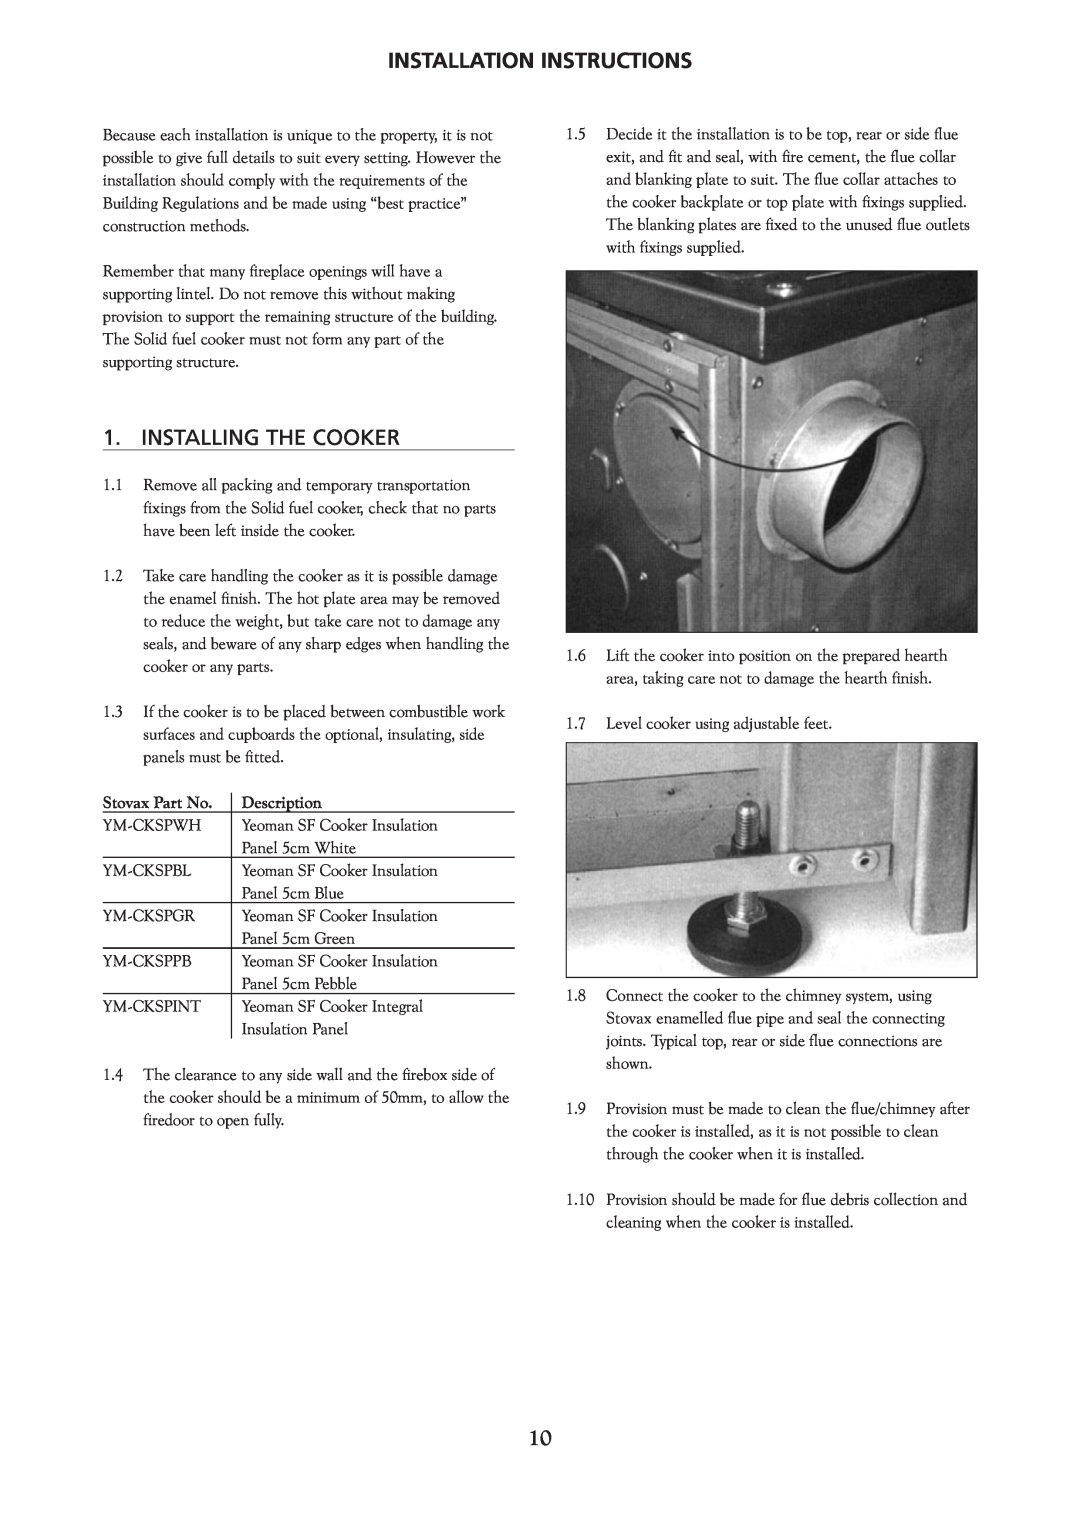 Yeoman YM-CKWDGR-L, YM-CKWDWH-L, YM-CKWDPB-R Installing The Cooker, Installation Instructions, Stovax Part No, Description 